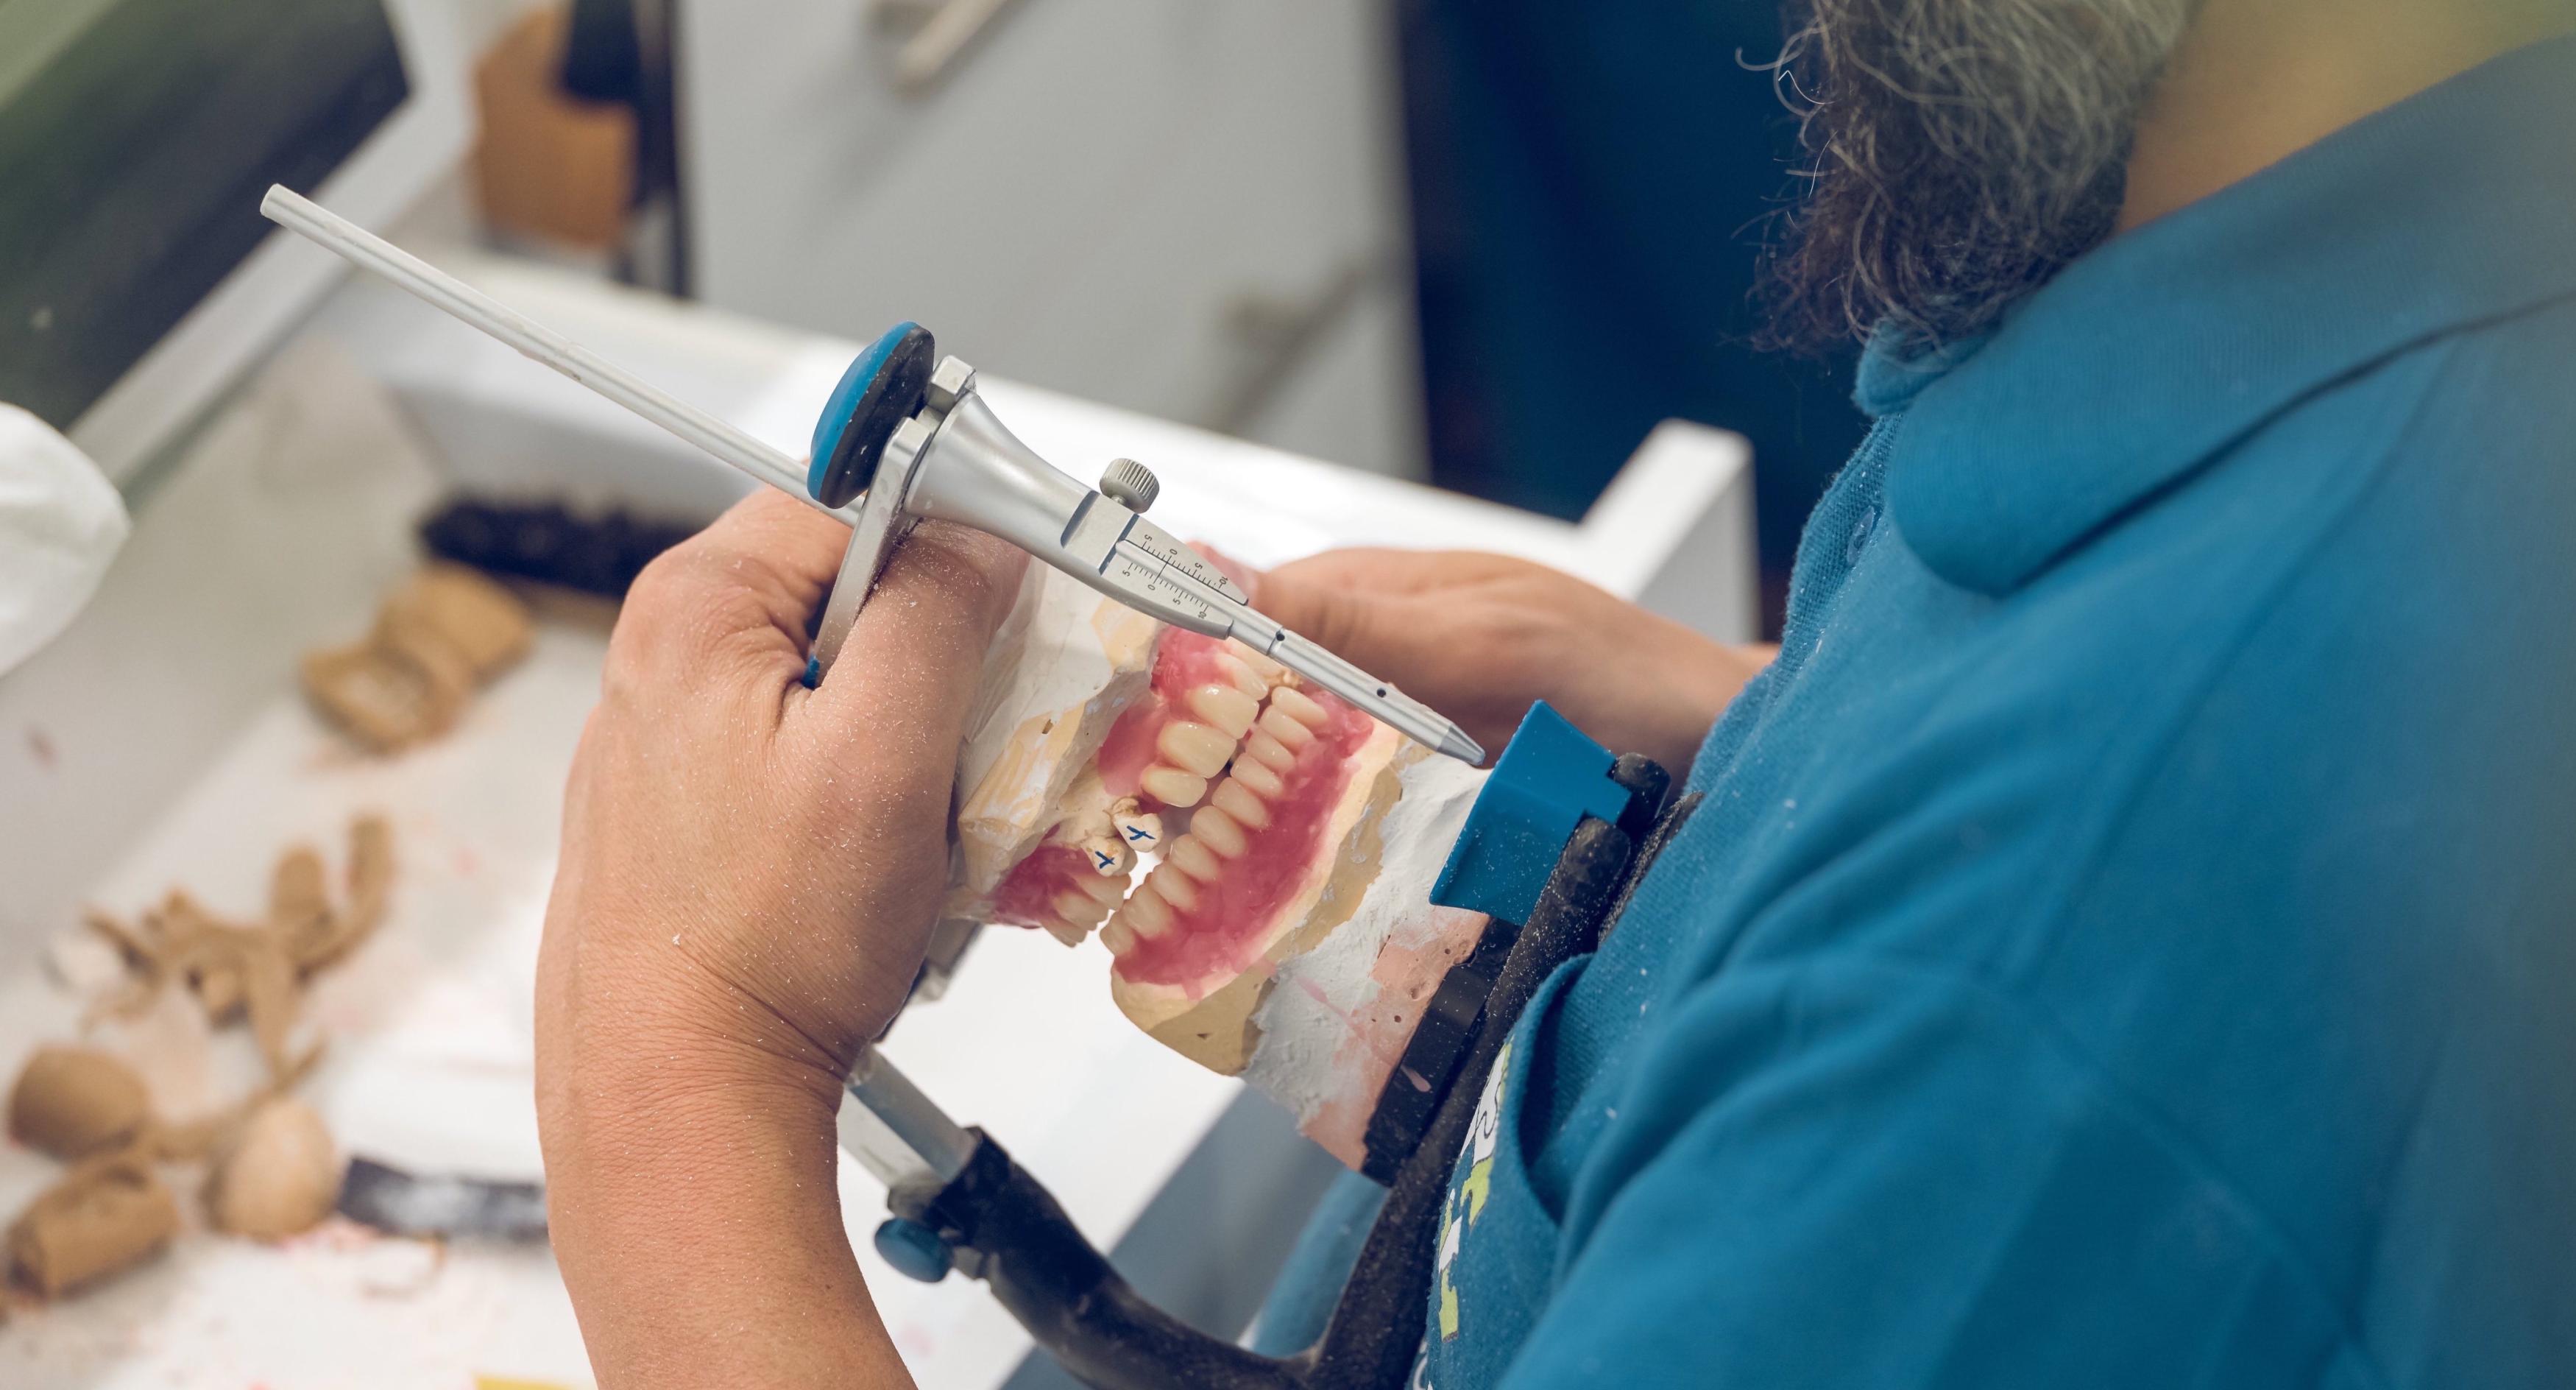 crop senior male technician fixing jaw dentures in 2022 01 29 05 59 58 utc 6 scaled